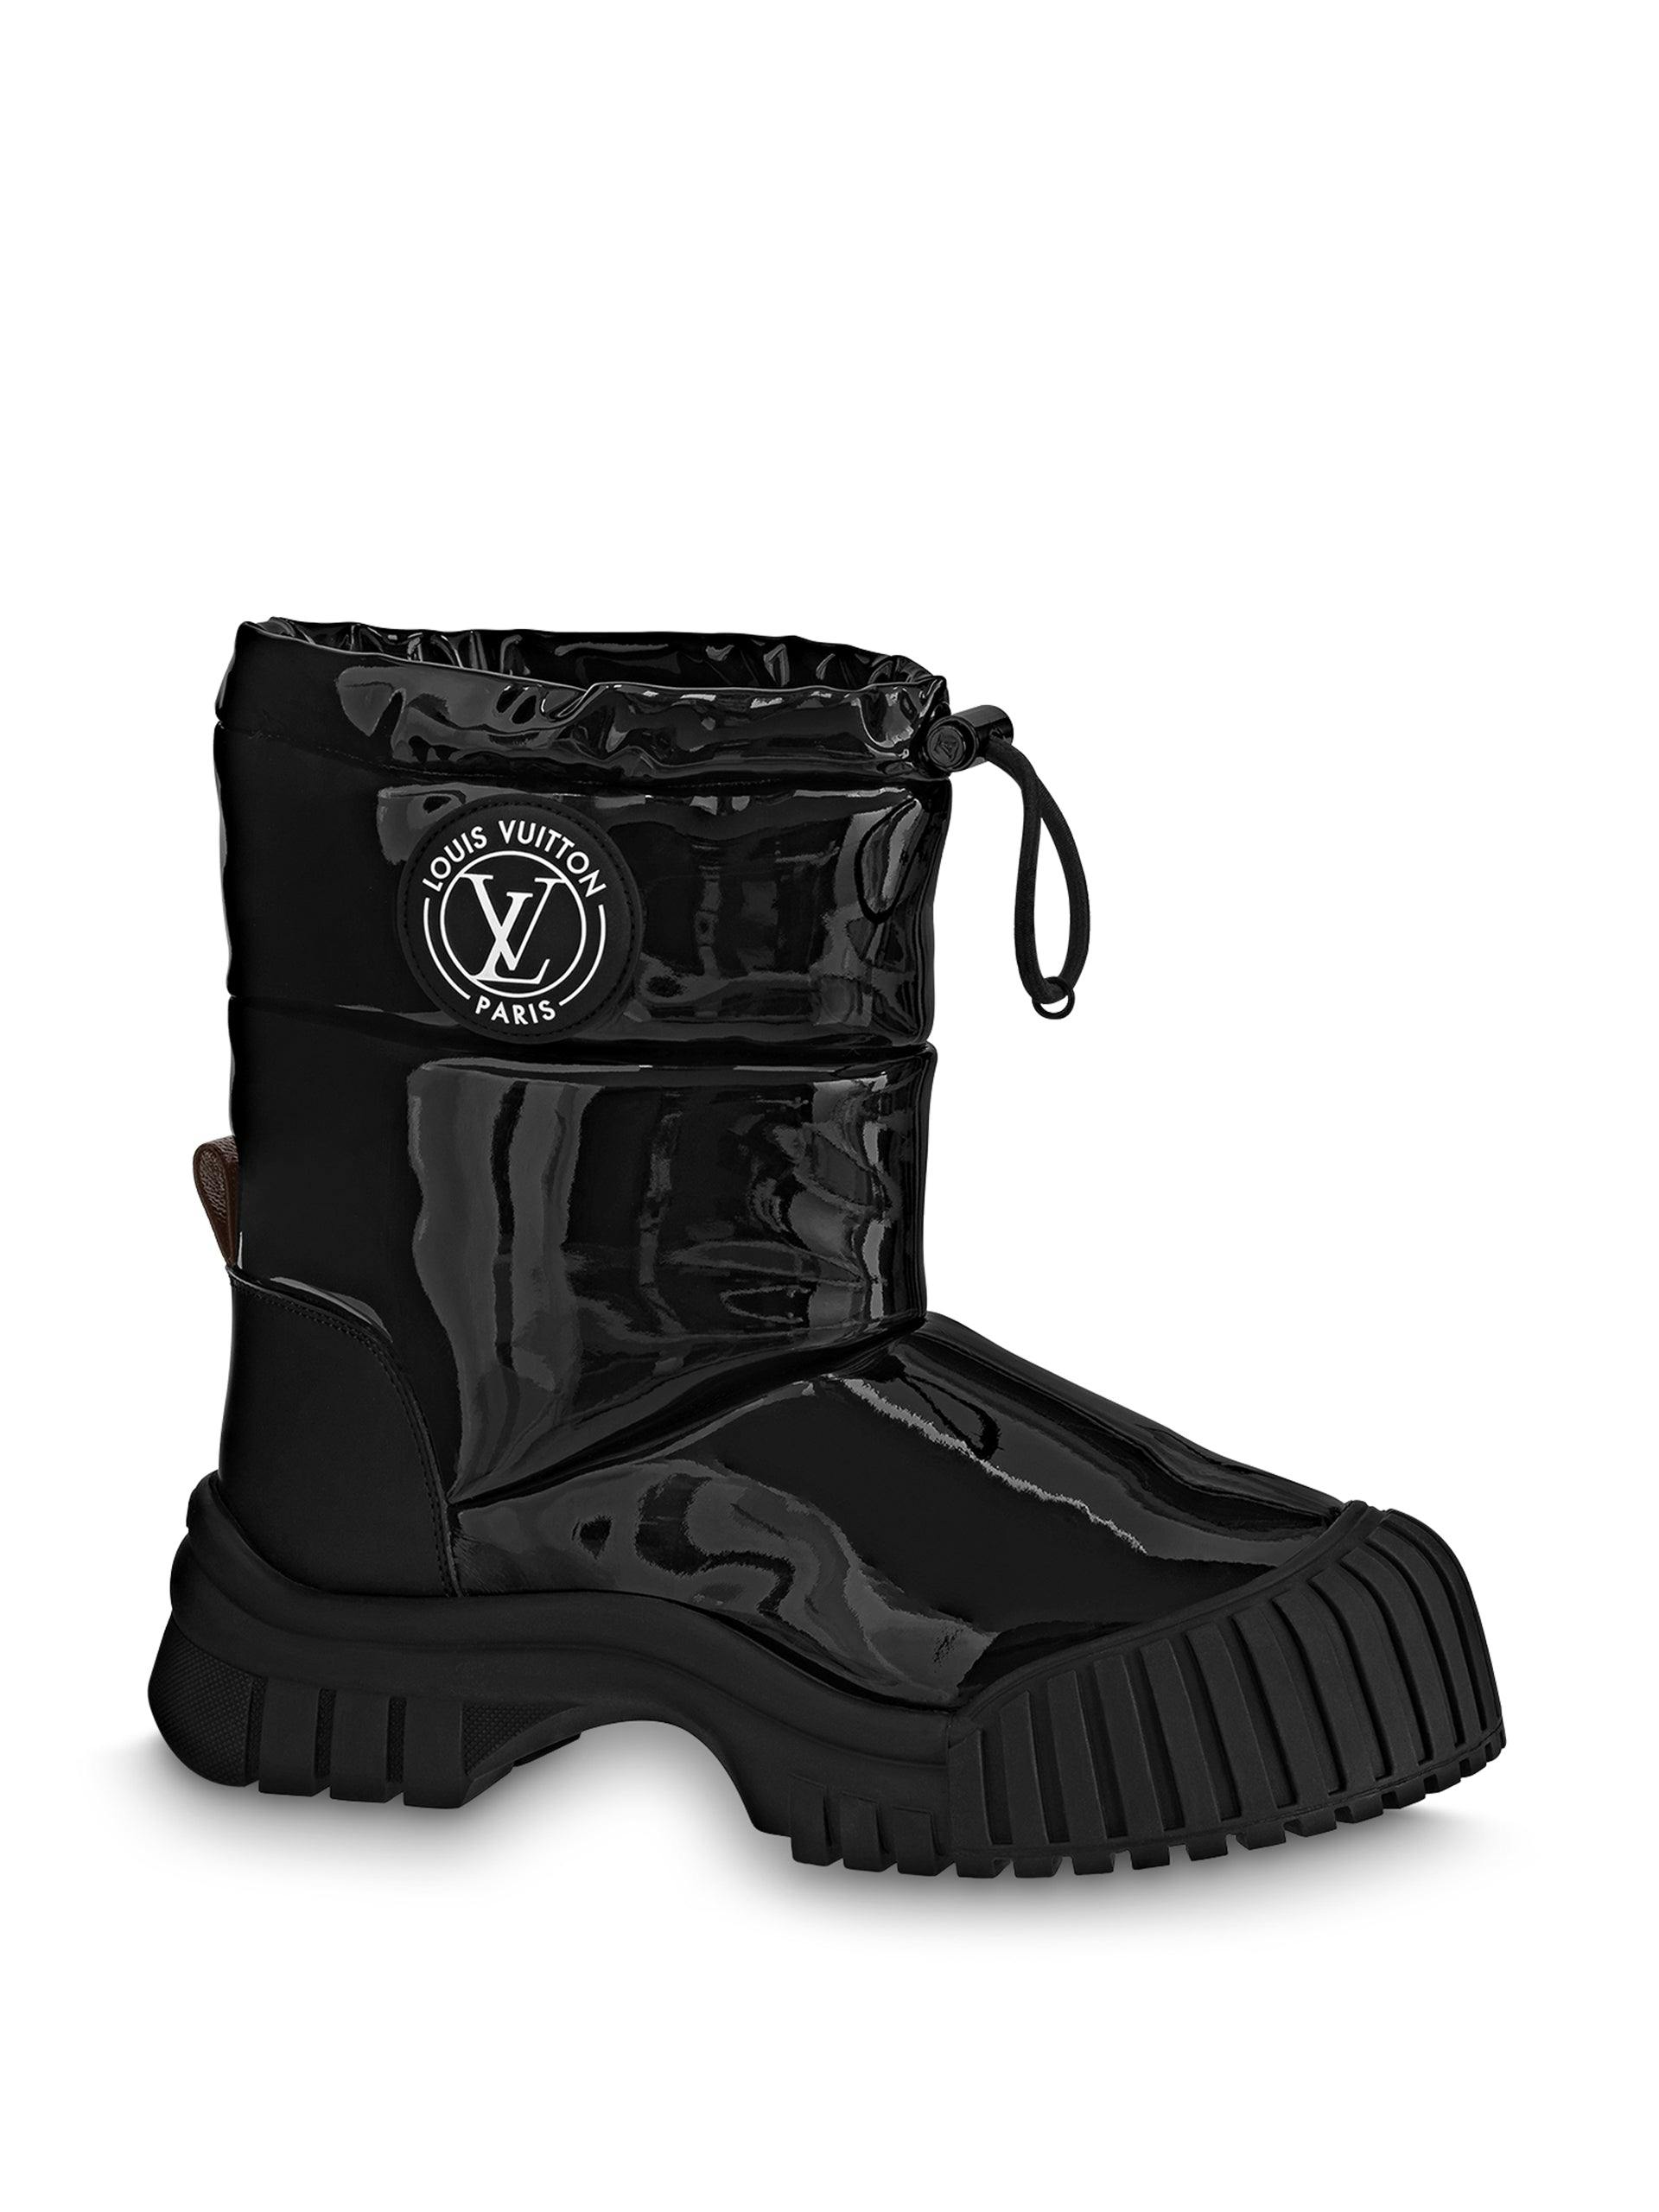 Black shiny padded boots